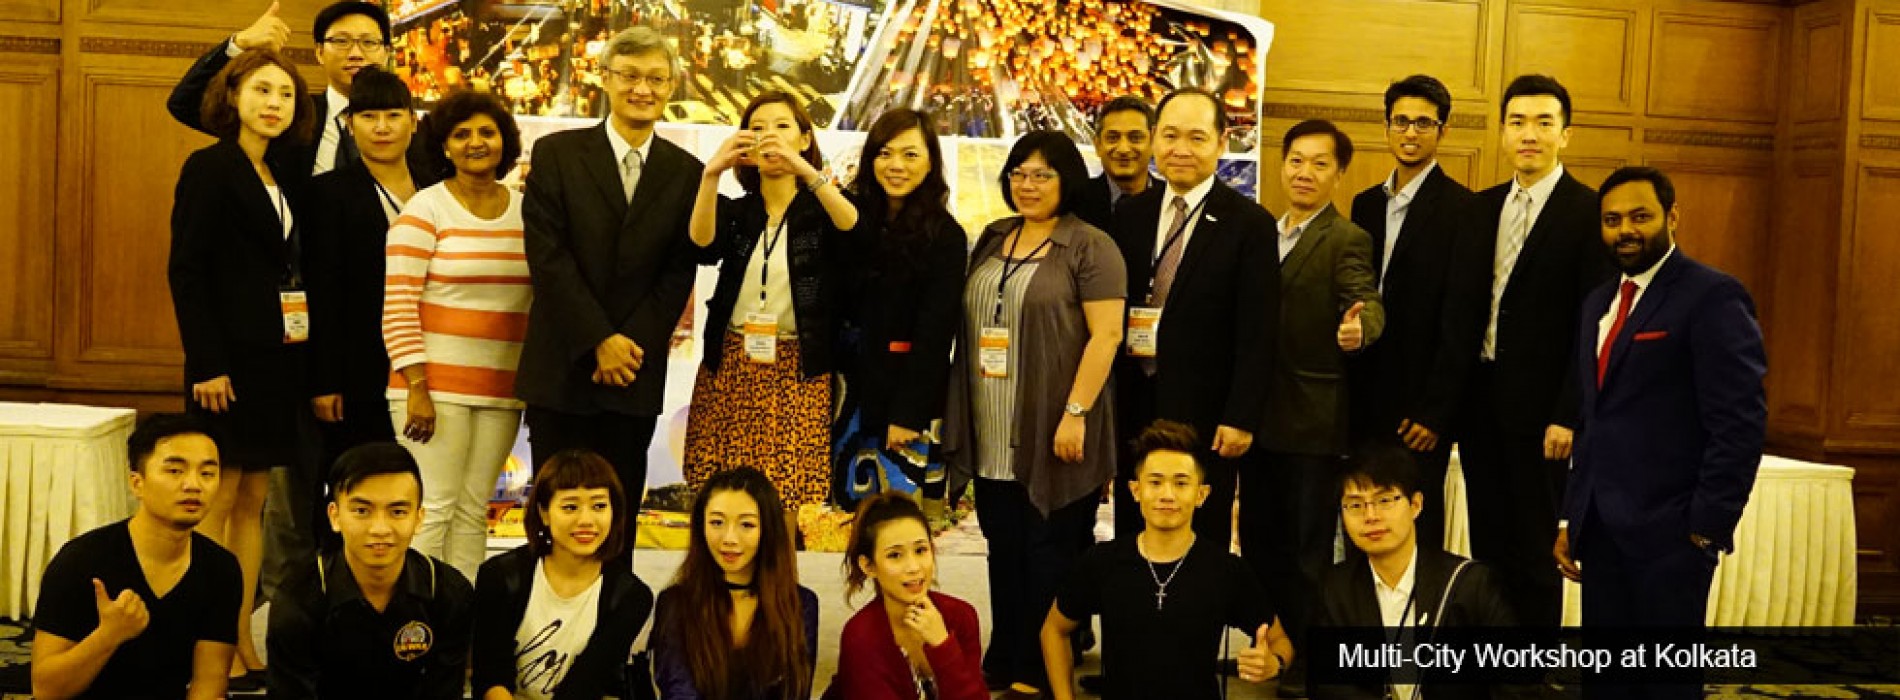 Taiwan Tourism Bureau kicks off 2016 with a multi-city workshop